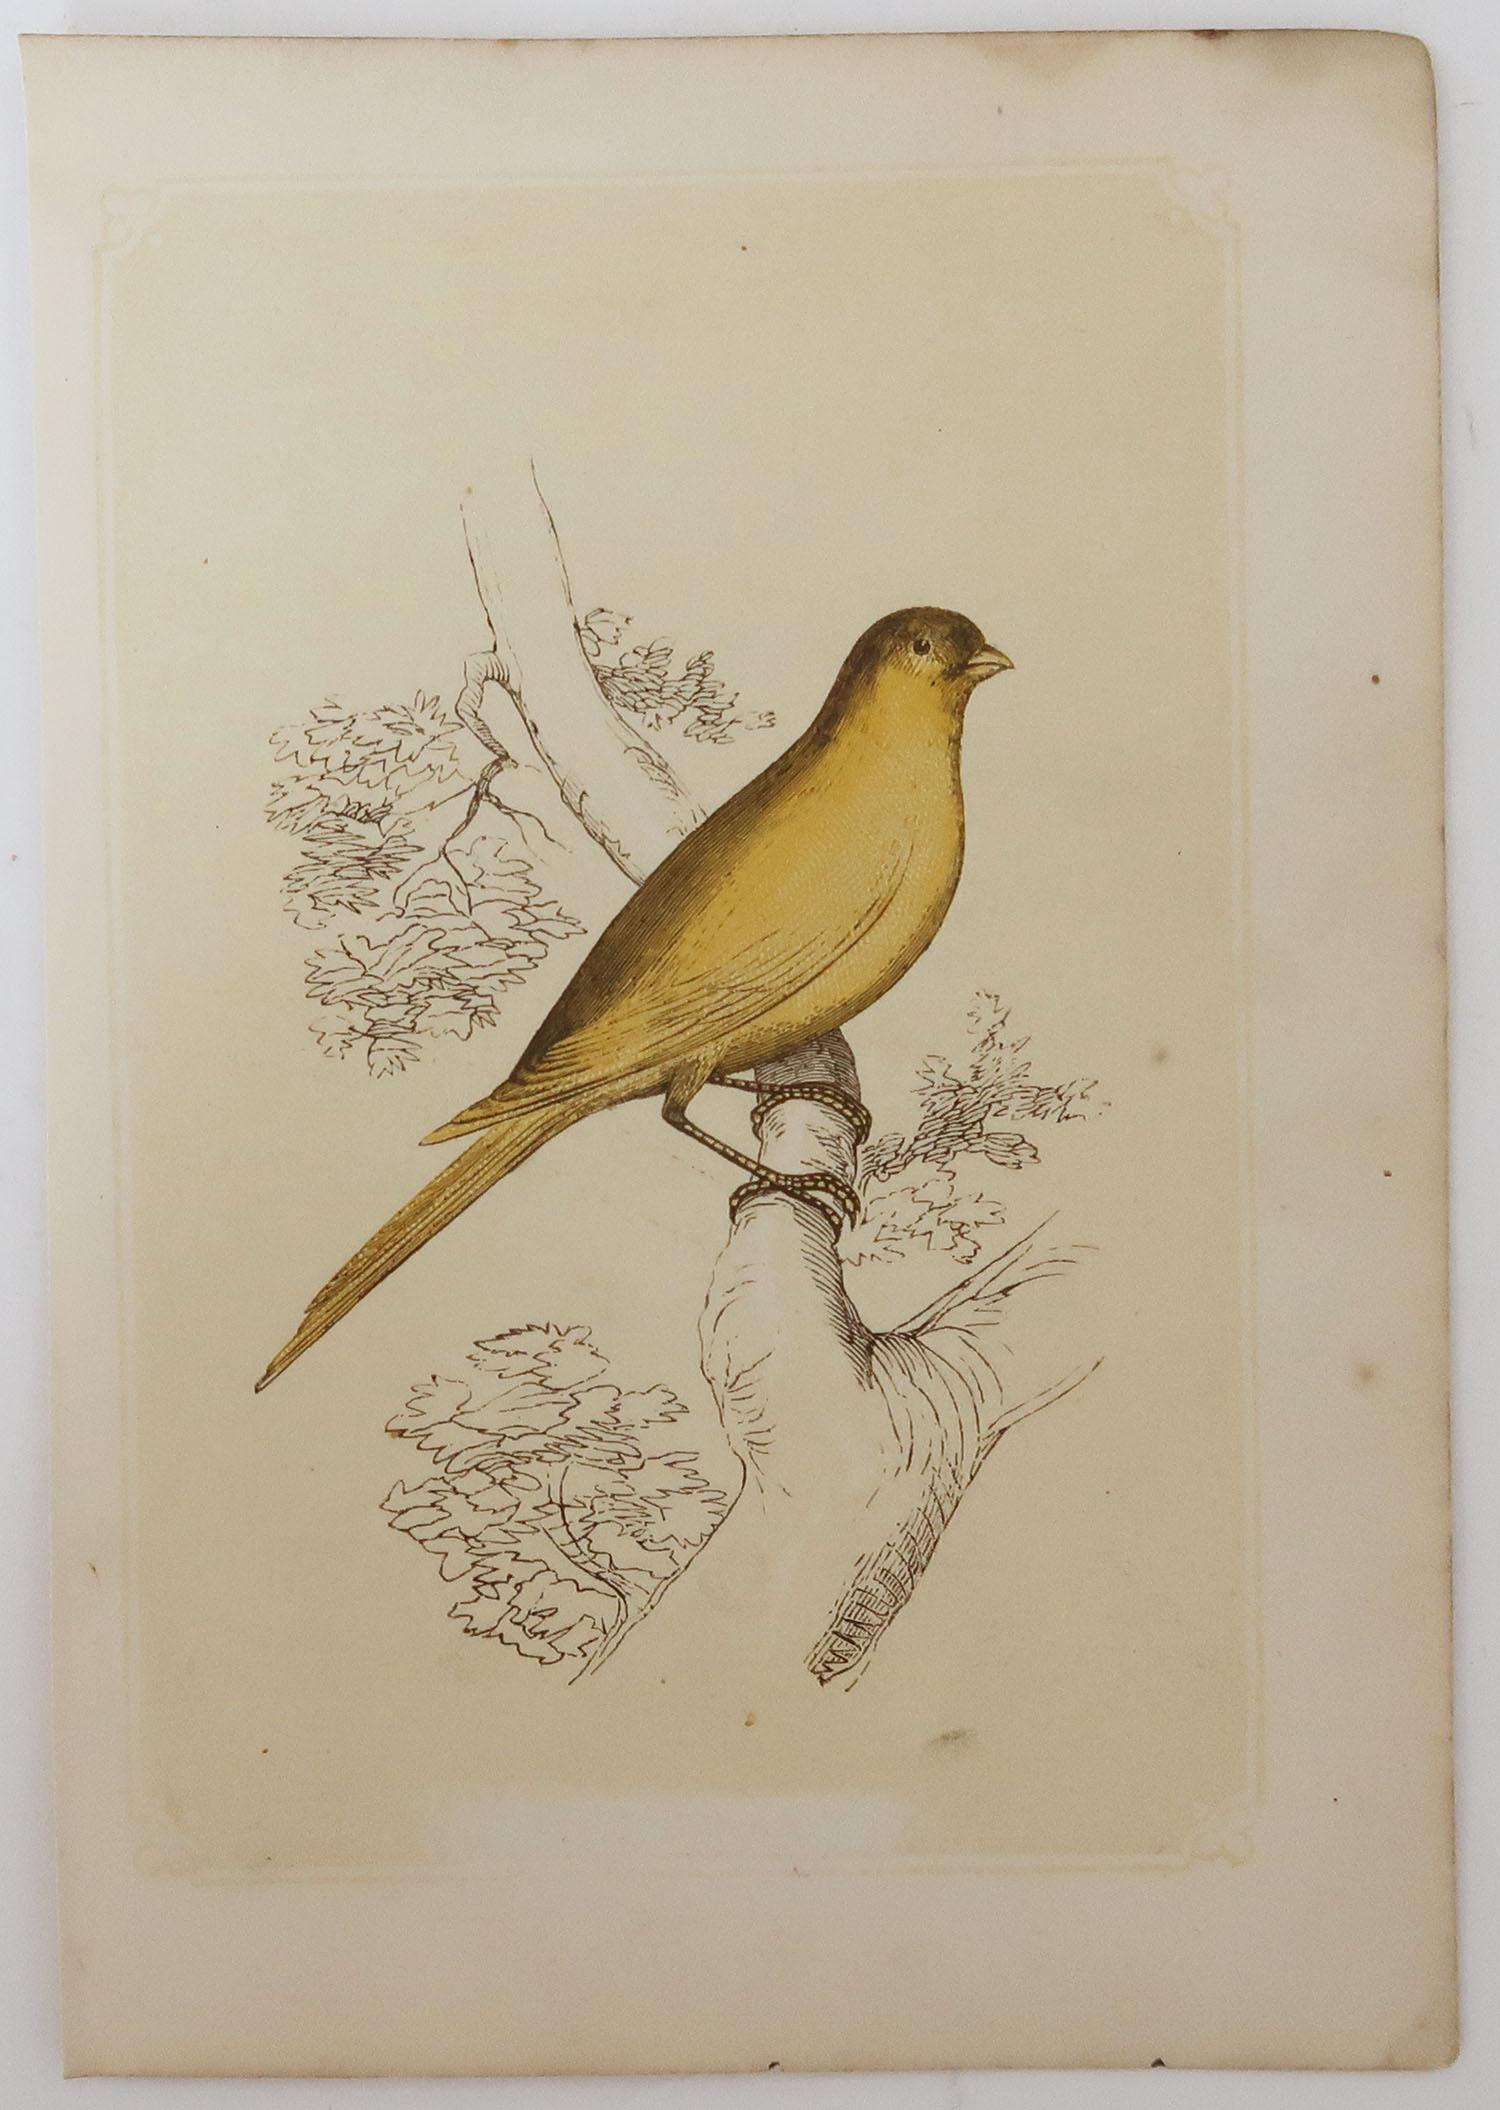 Folk Art Original Antique Bird Print, the Canary Finch, Tallis, circa 1850